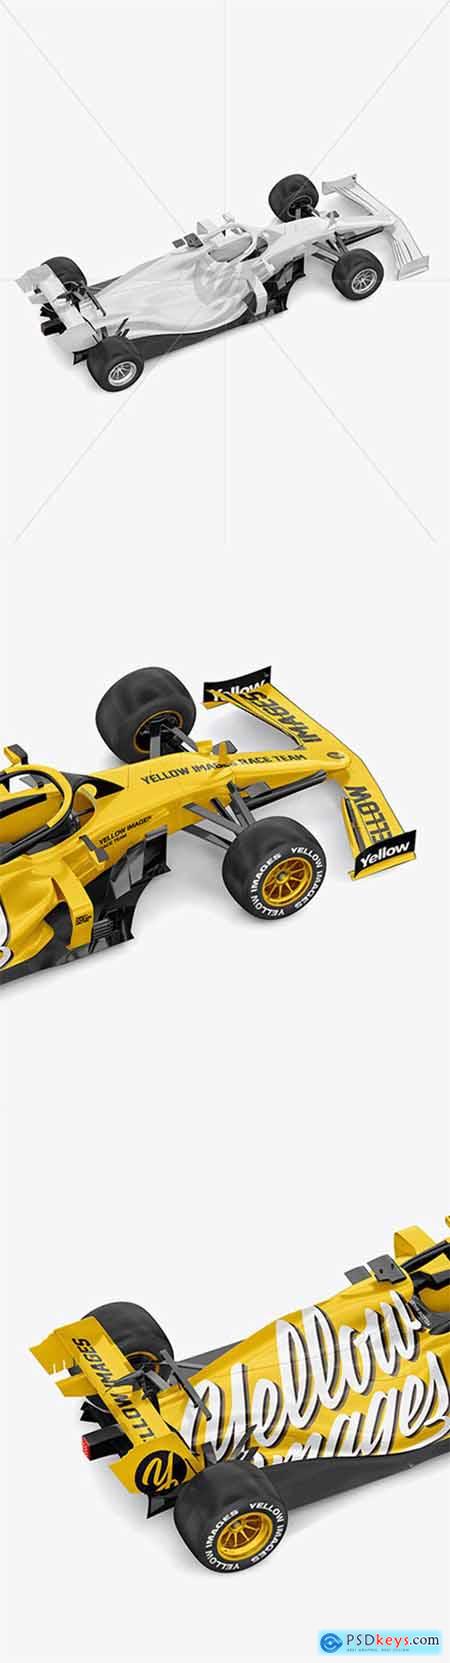 Download Formula-1 2020 Mockup - Half Side View (high-angle shot) 61611 » Free Download Photoshop Vector ...